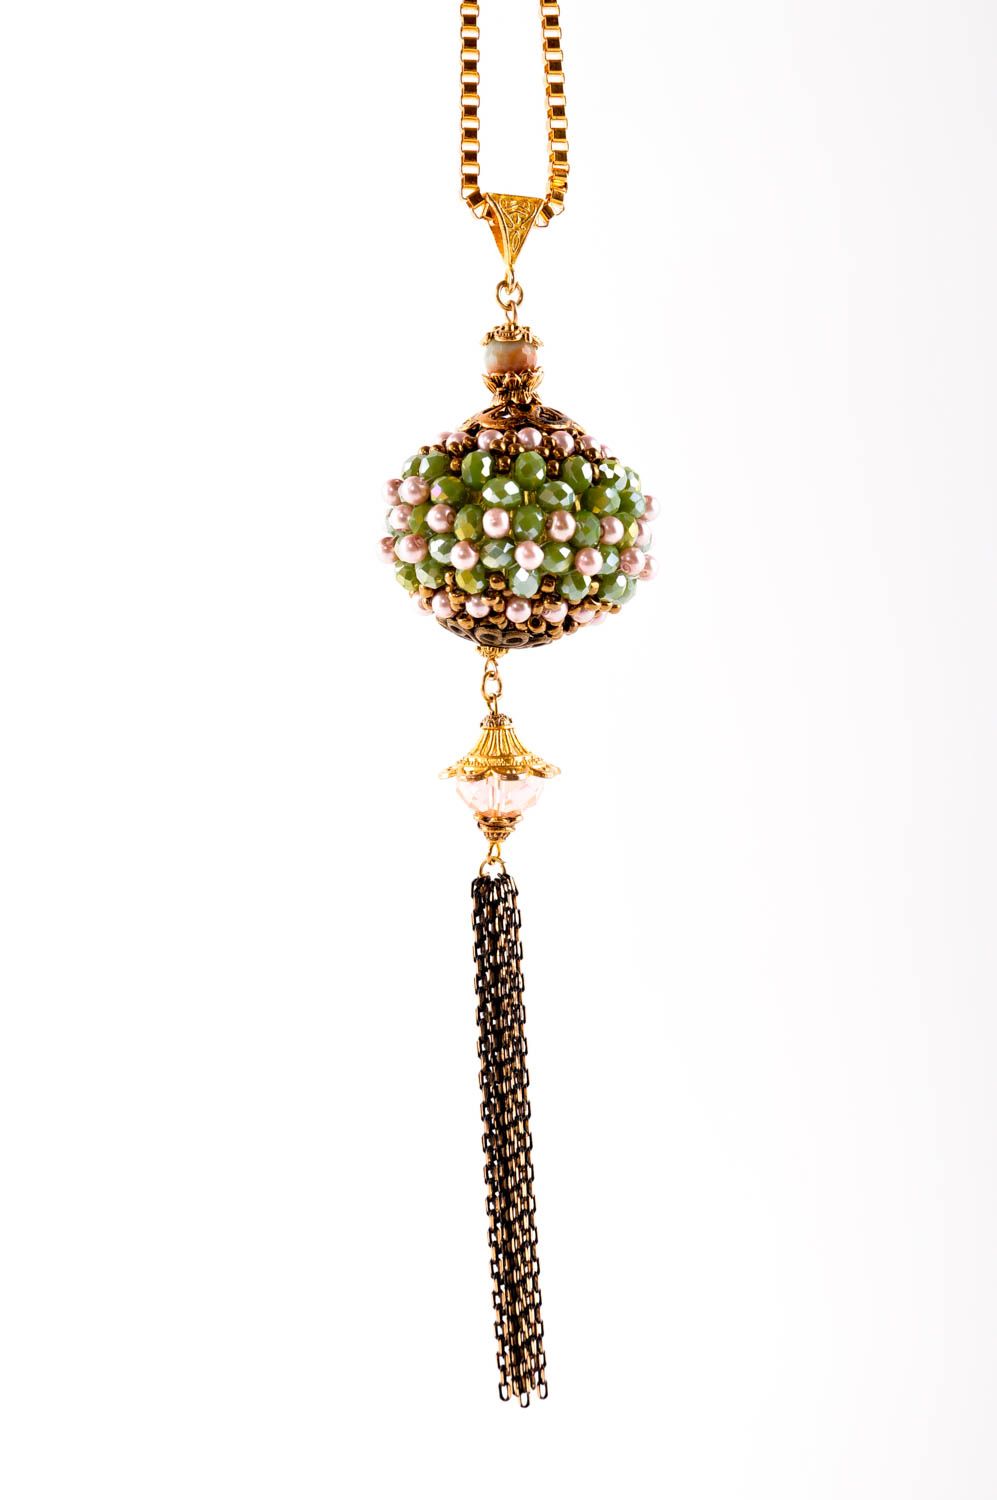 Handmade pendant designer pendant unusual accessory luxury jewelry gift ideas photo 2